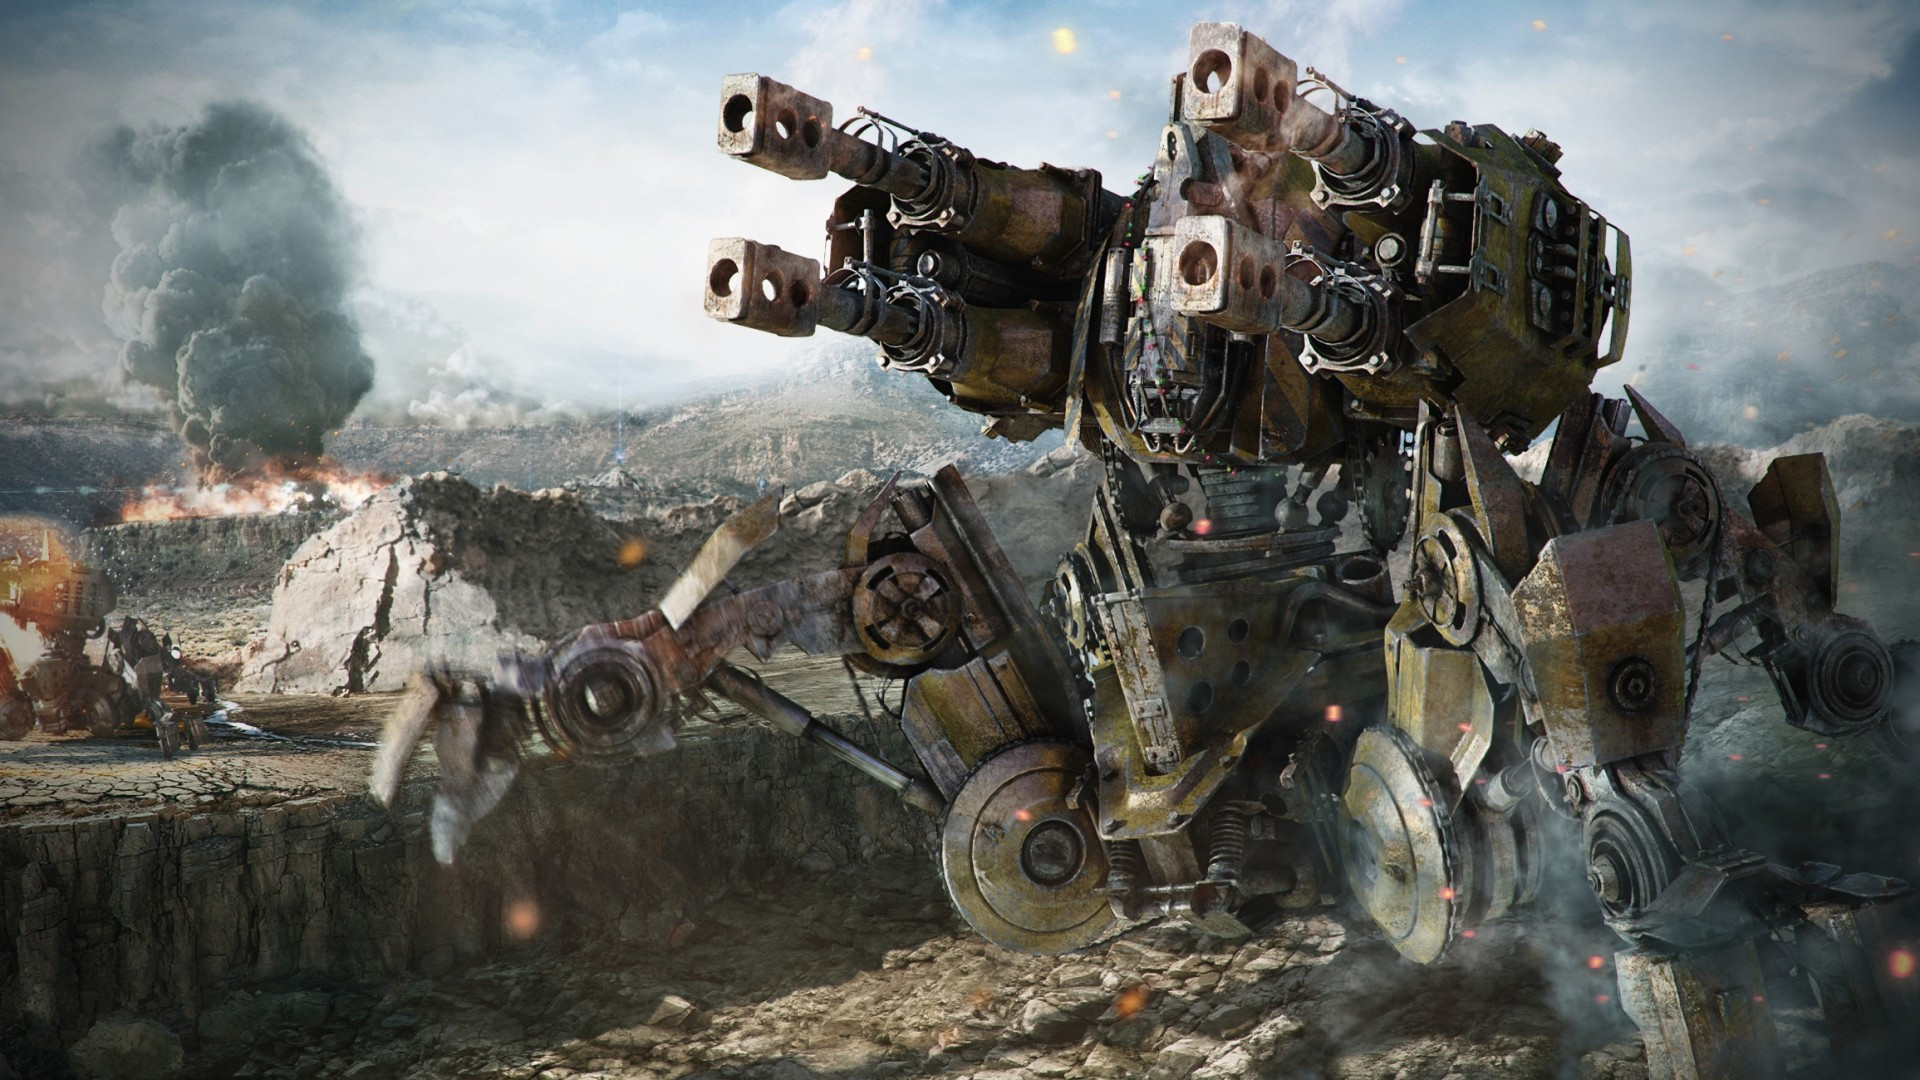 Download 1920x1080 Mech Robots, Battle, Sci Fi War, Futuristic, Cannons Wallpaper For Widescreen